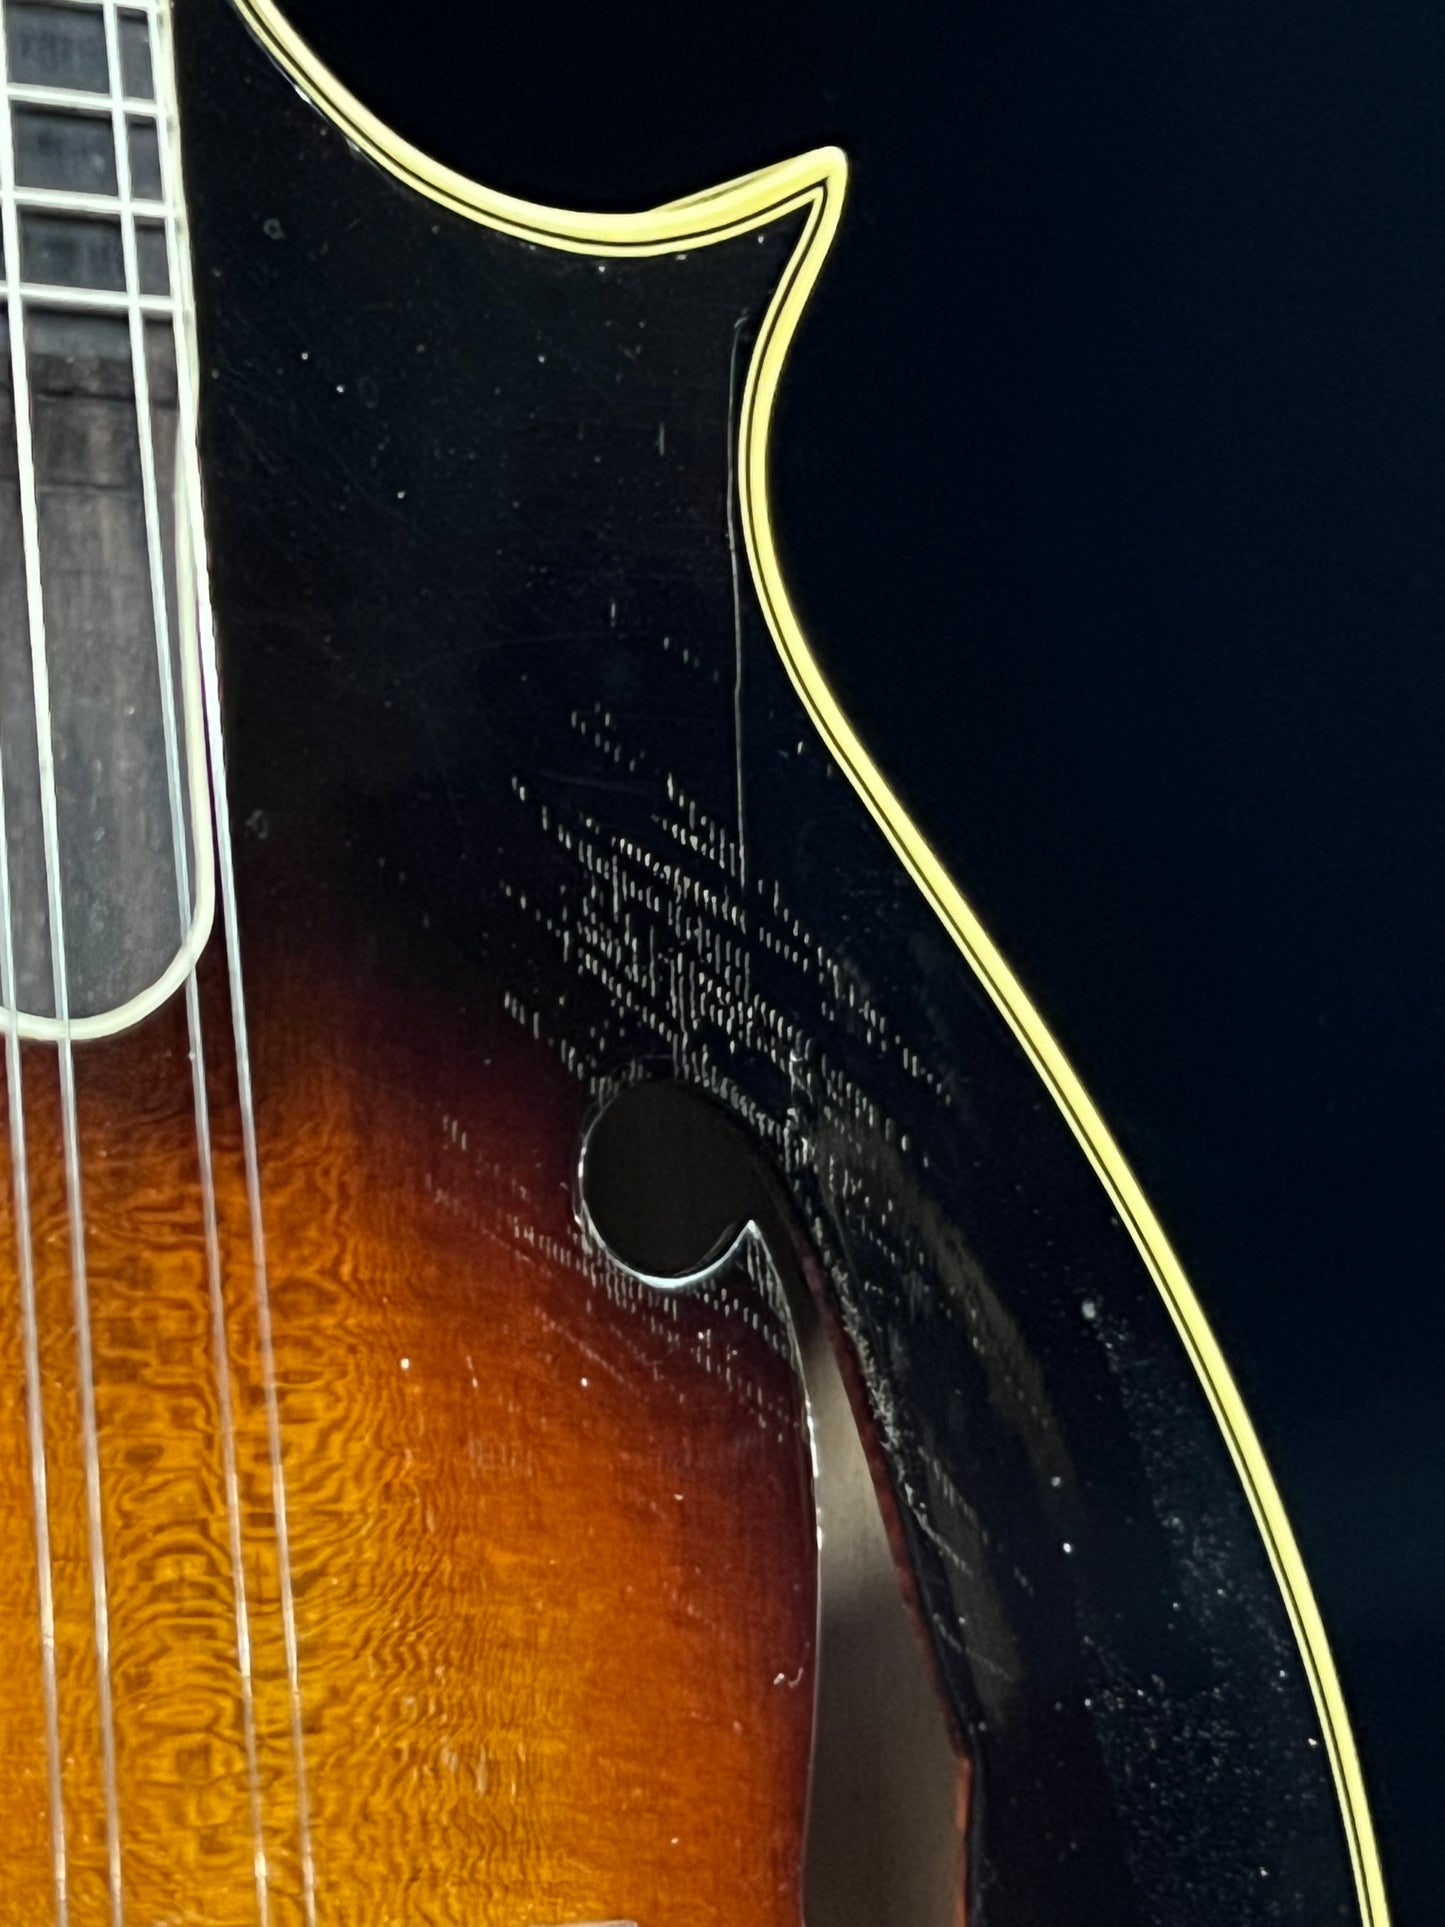 SOLD - Kentucky KM-1000 Sunburst F-Style Mandolin - Used